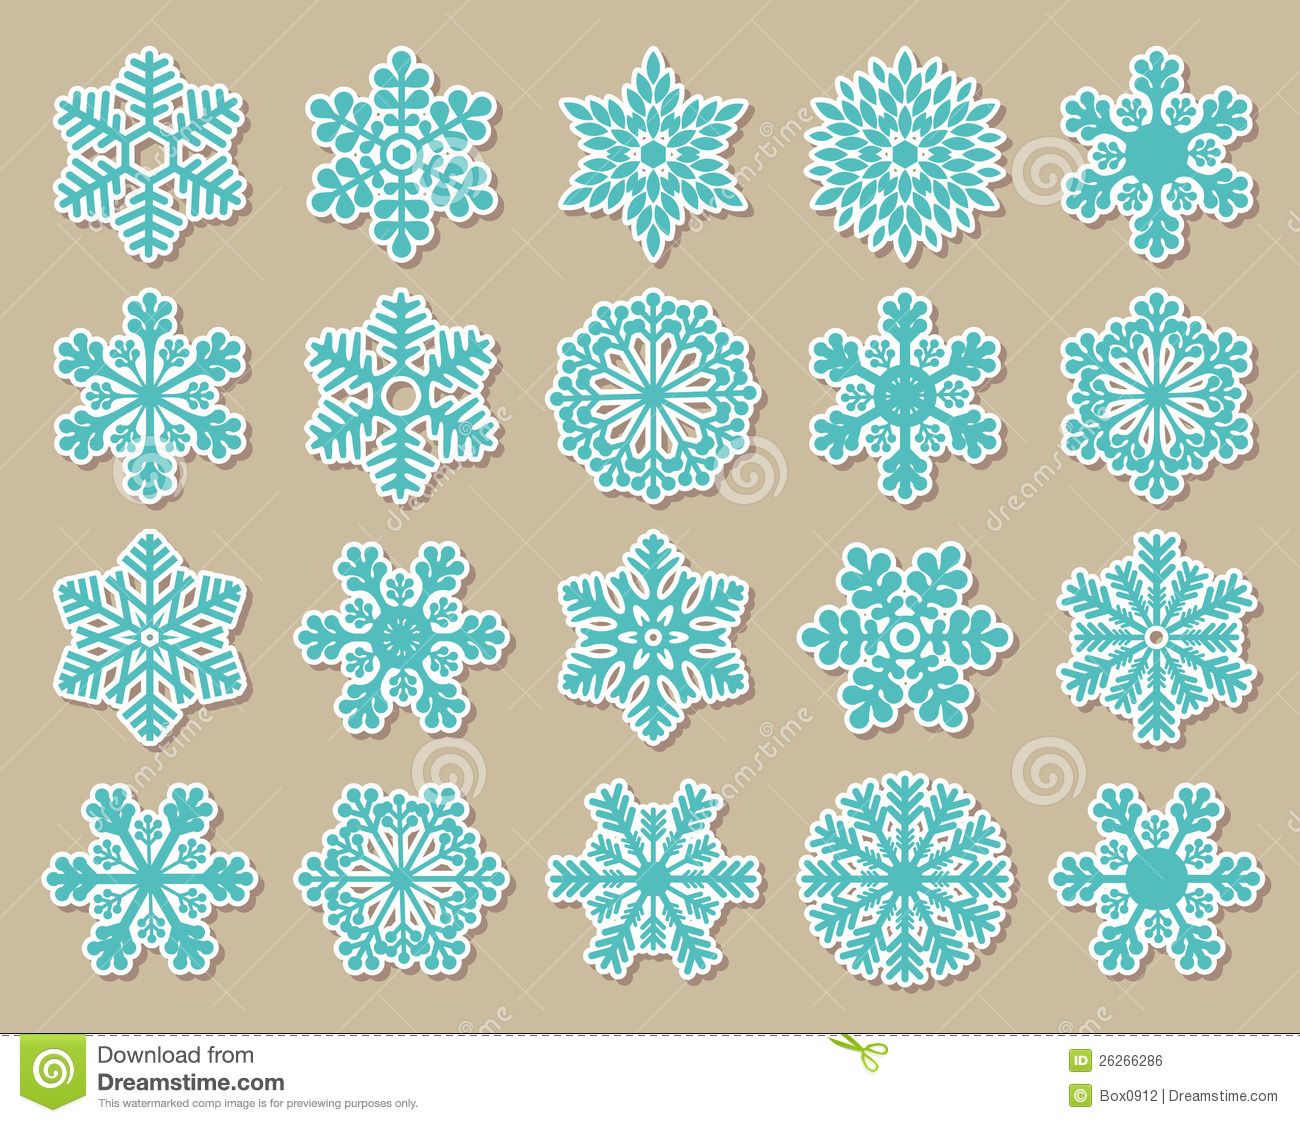 Vintage Blue Snowflakes Royalty Free Stock Image   Image  26266286